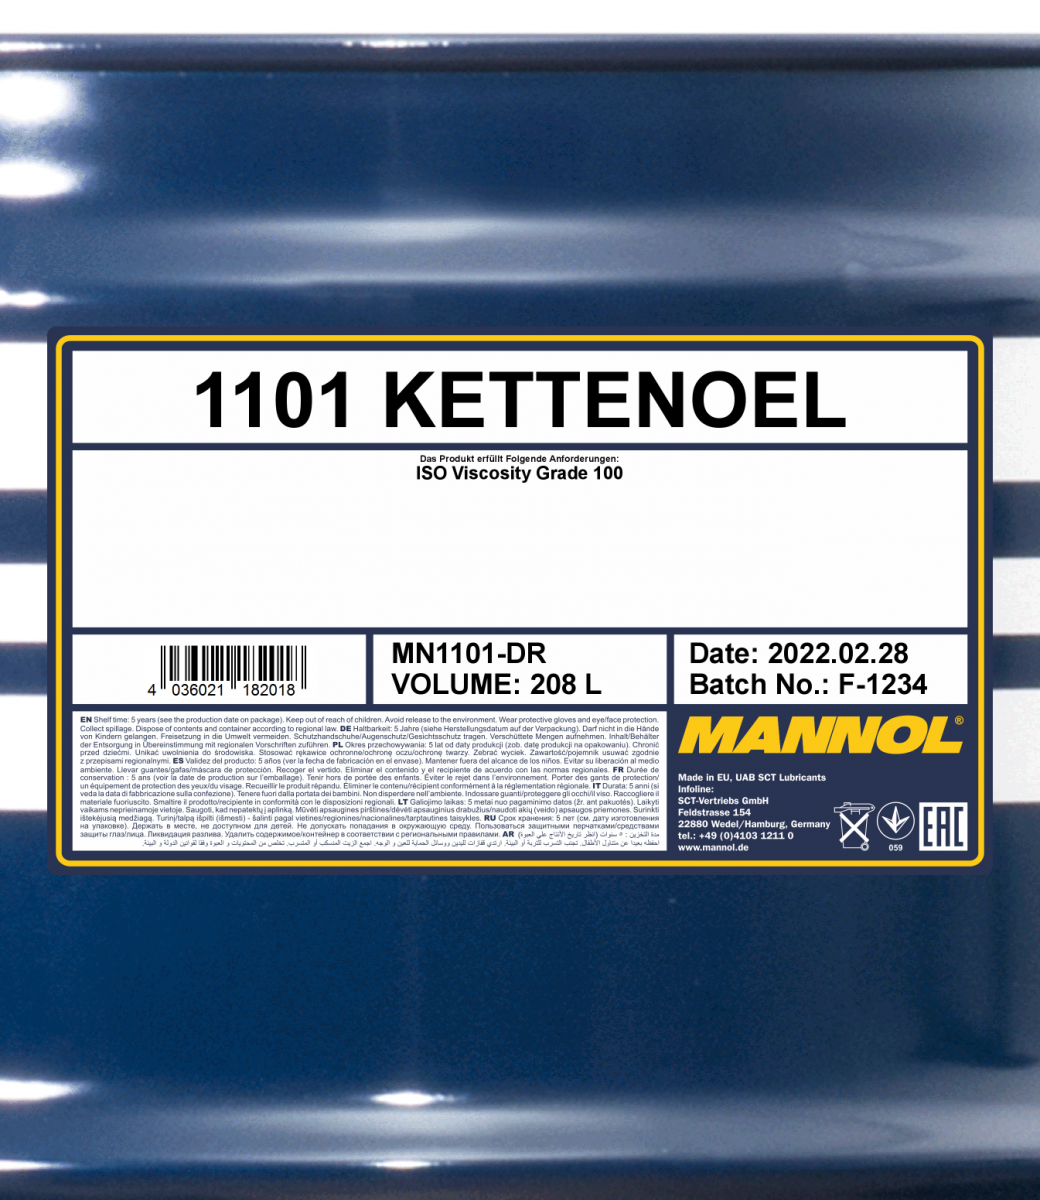 1l Mannol 1101 Kettensägenöl Kettenöl für Motorsägen, Kettensägenöle, Service Flüssigkeiten